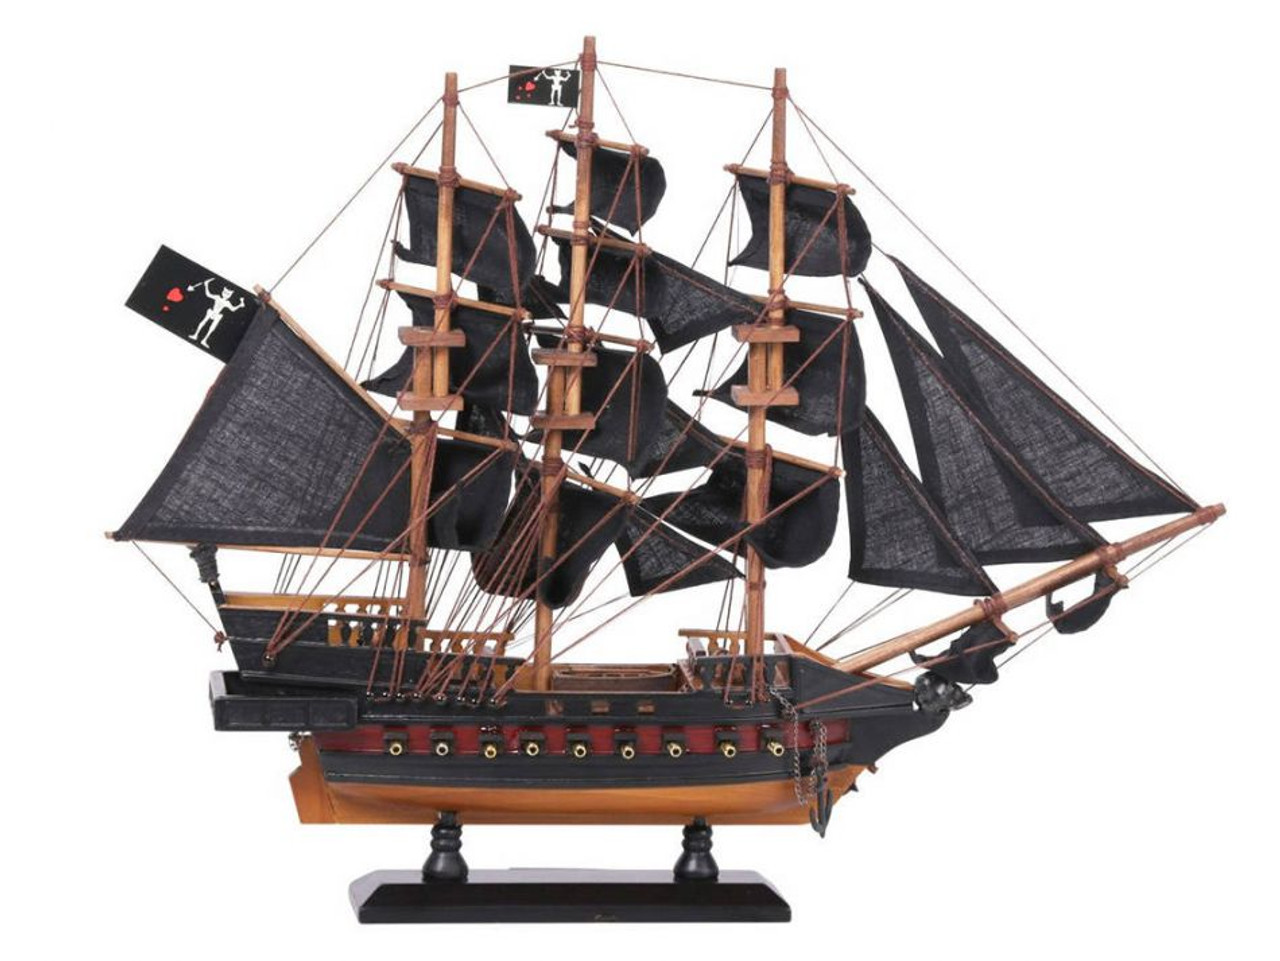 Blackbeard's Queen Anne's Revenge - Black Sails Limited Model Pirate Ship - 15"